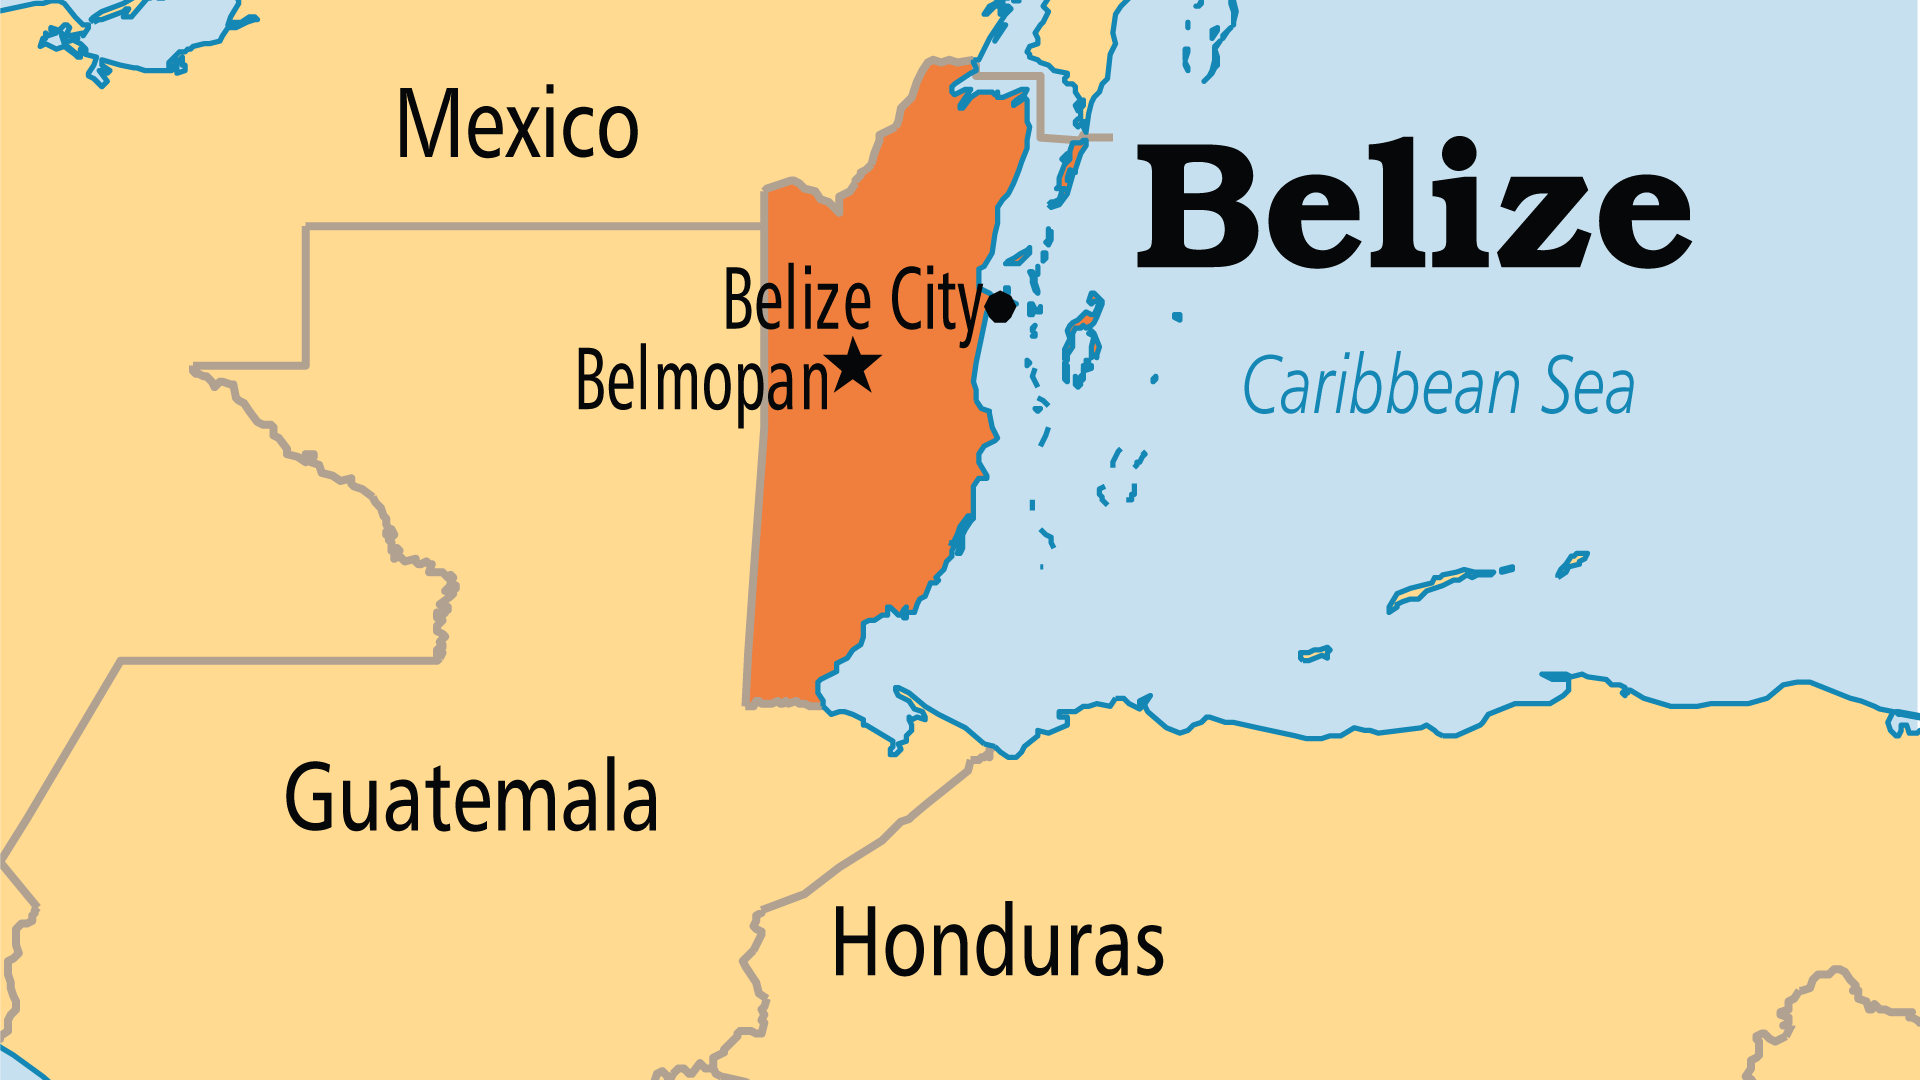 Belize (Operation World)